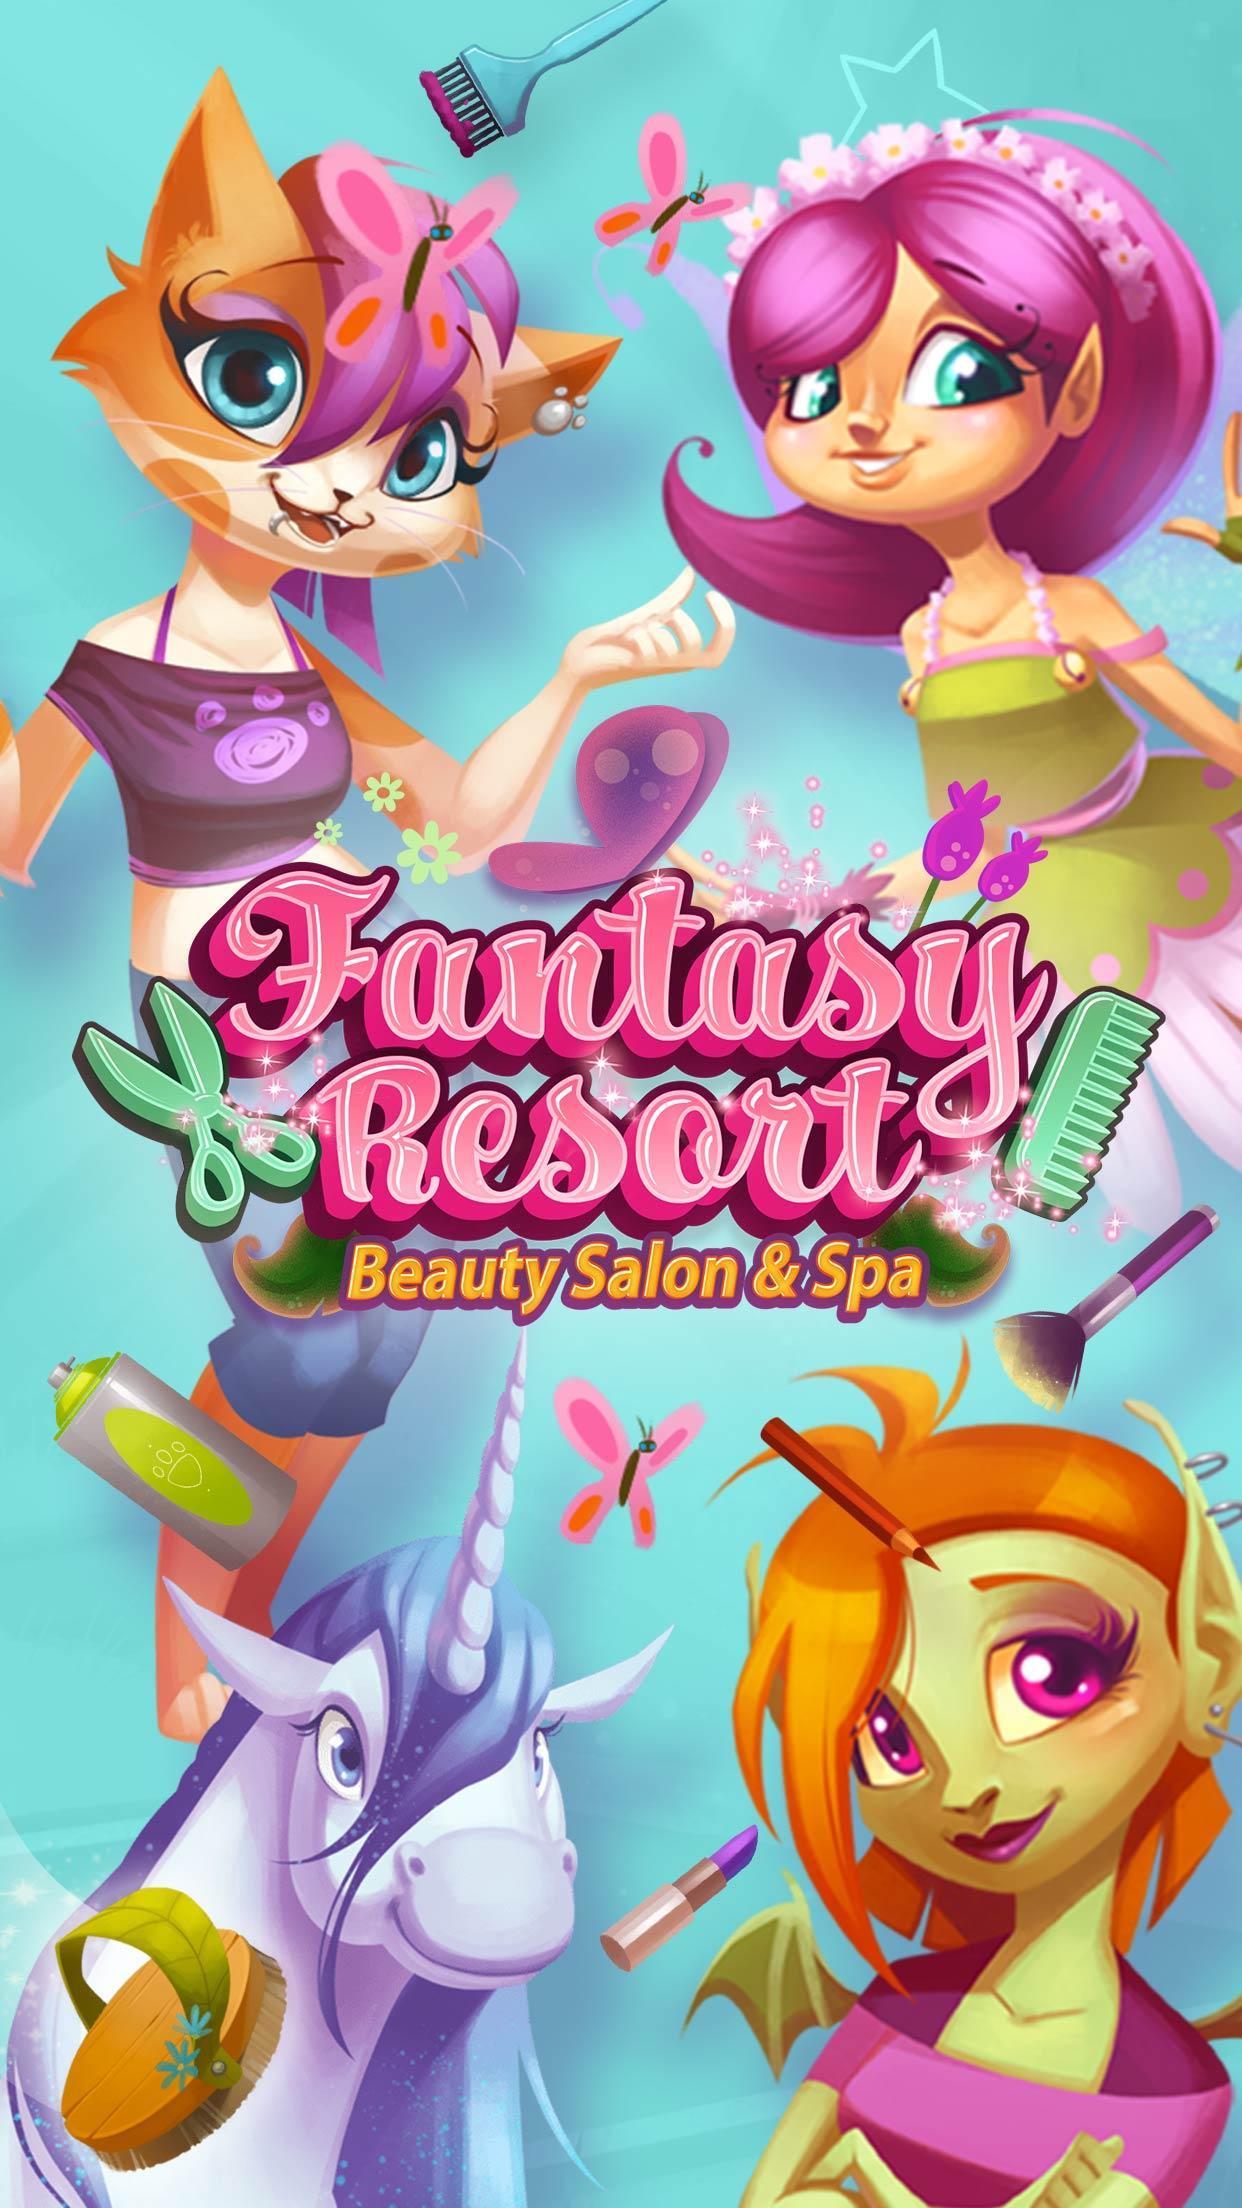 Fantasy Village Resort - Spa, Hair, Makeup & Bathのキャプチャ